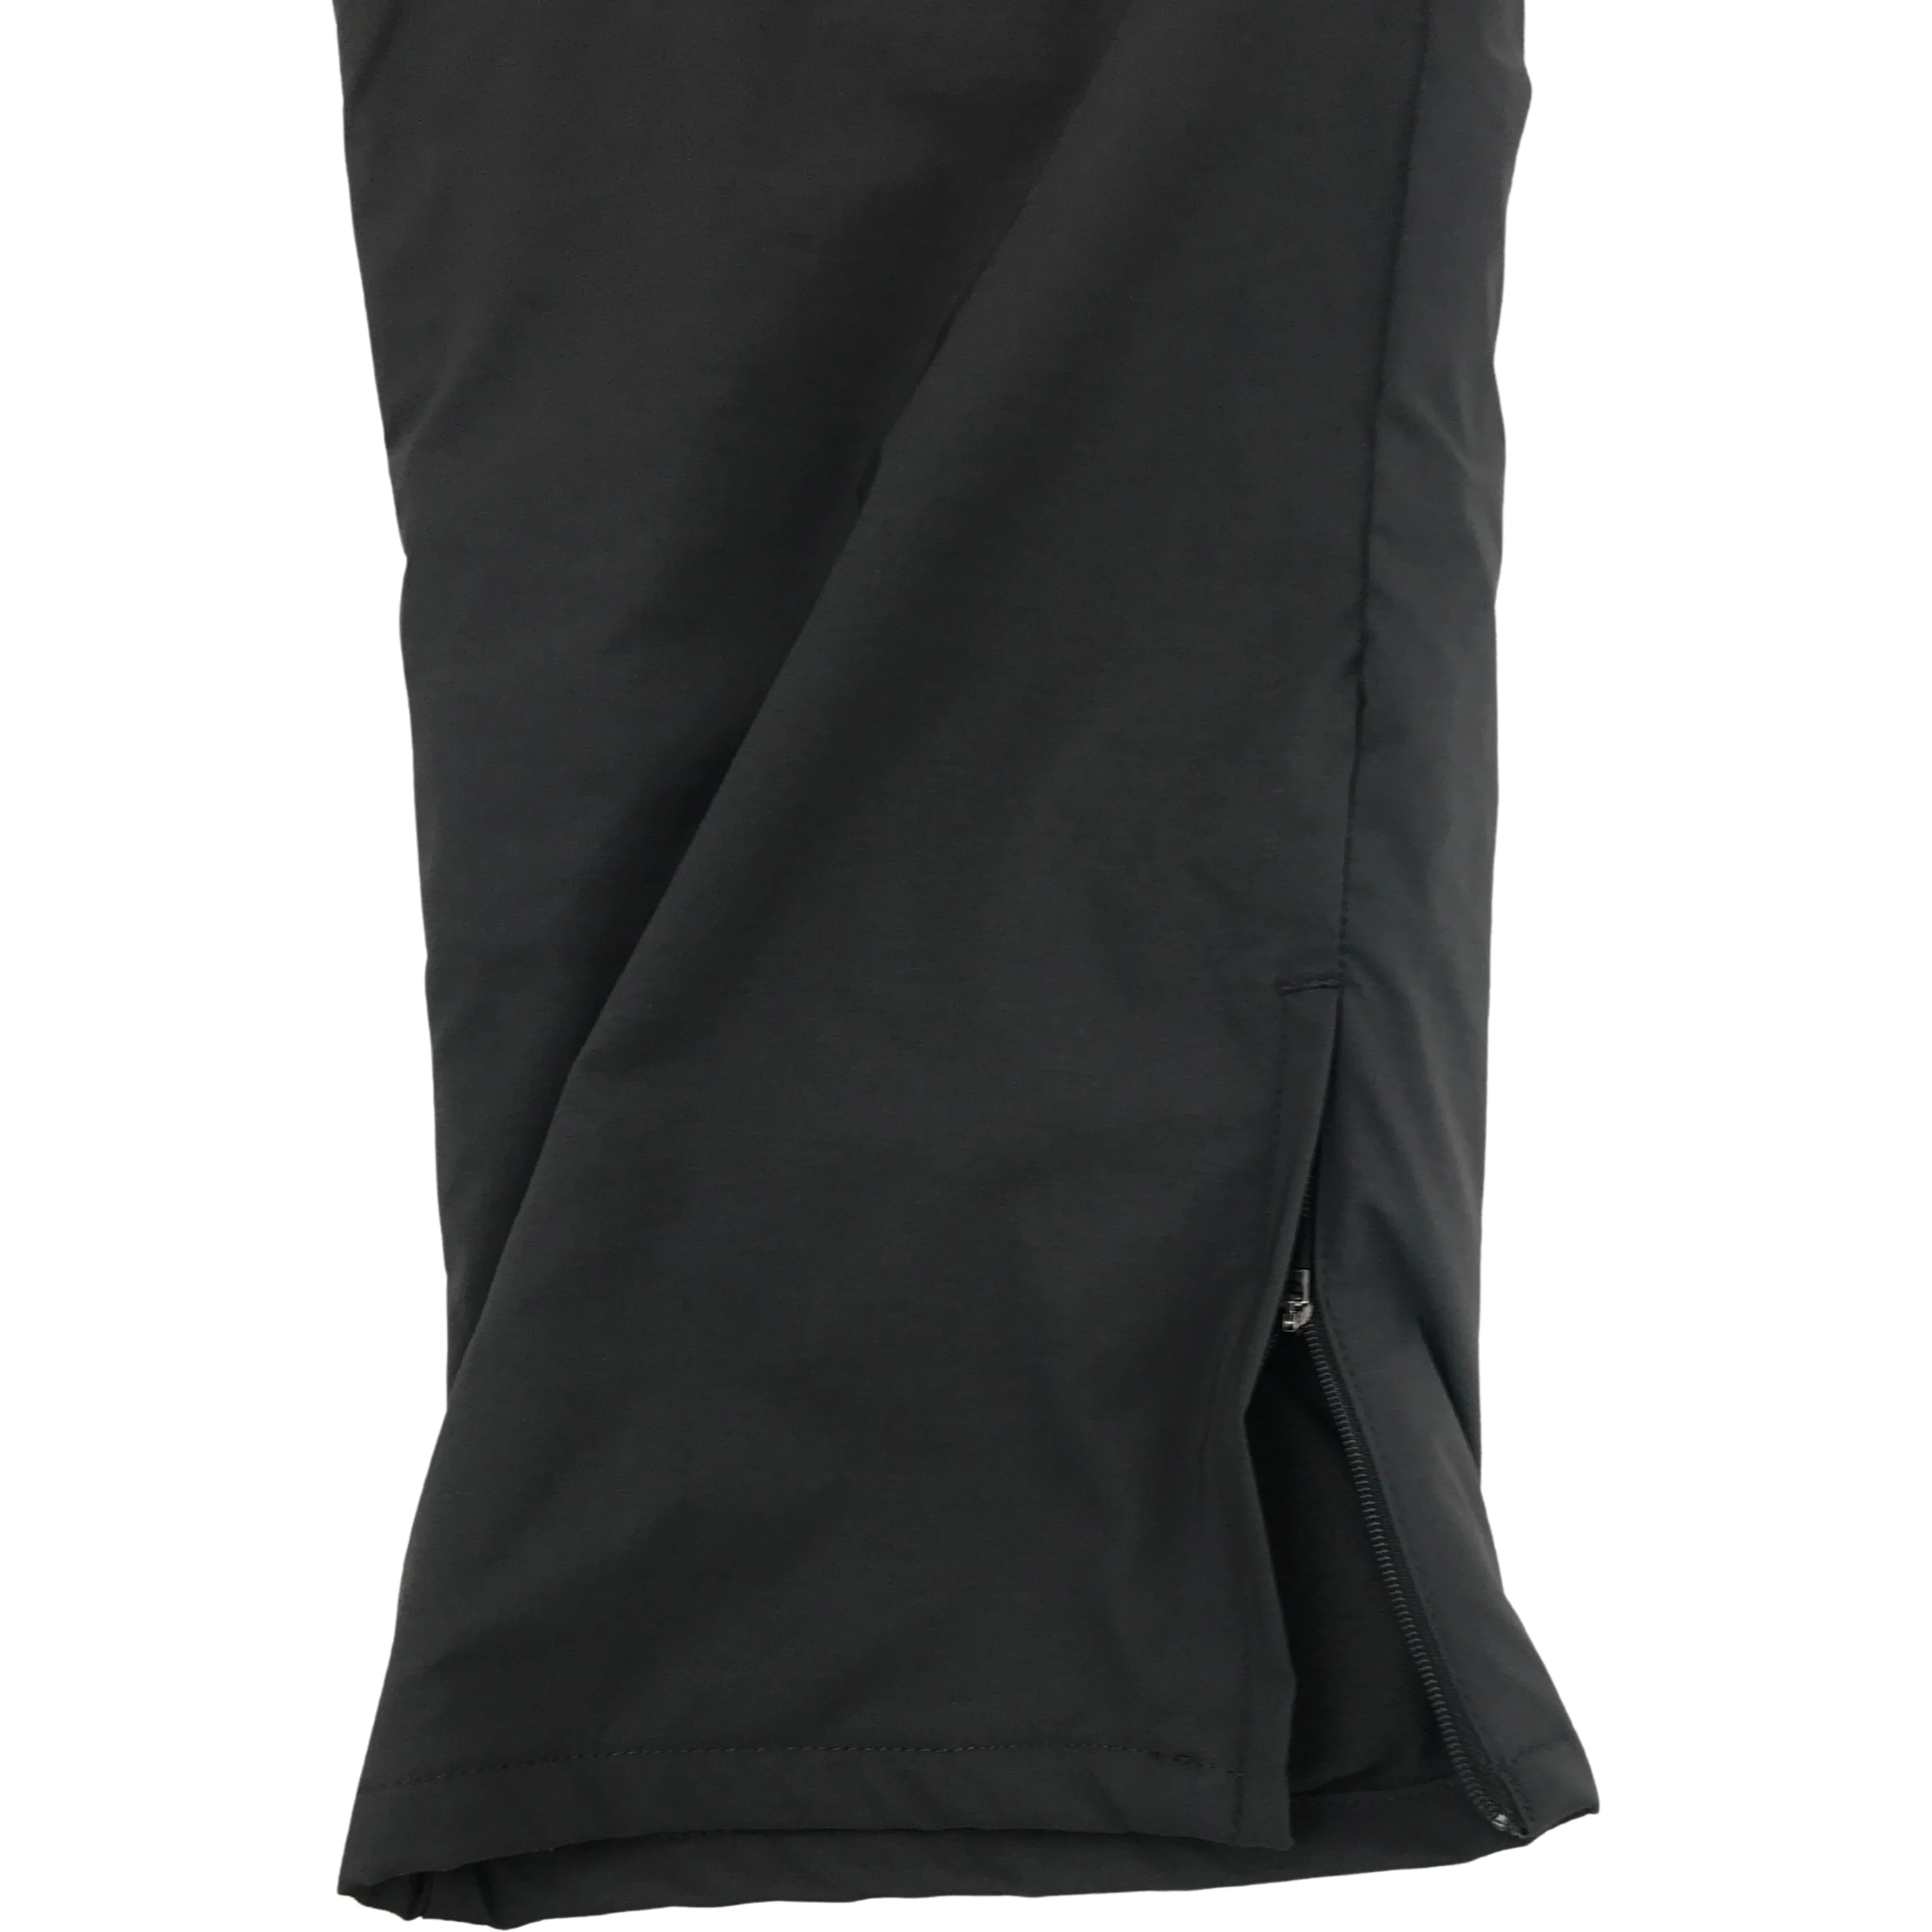 Stormpack Women's Lined Winter Pants / Grey / Size XL